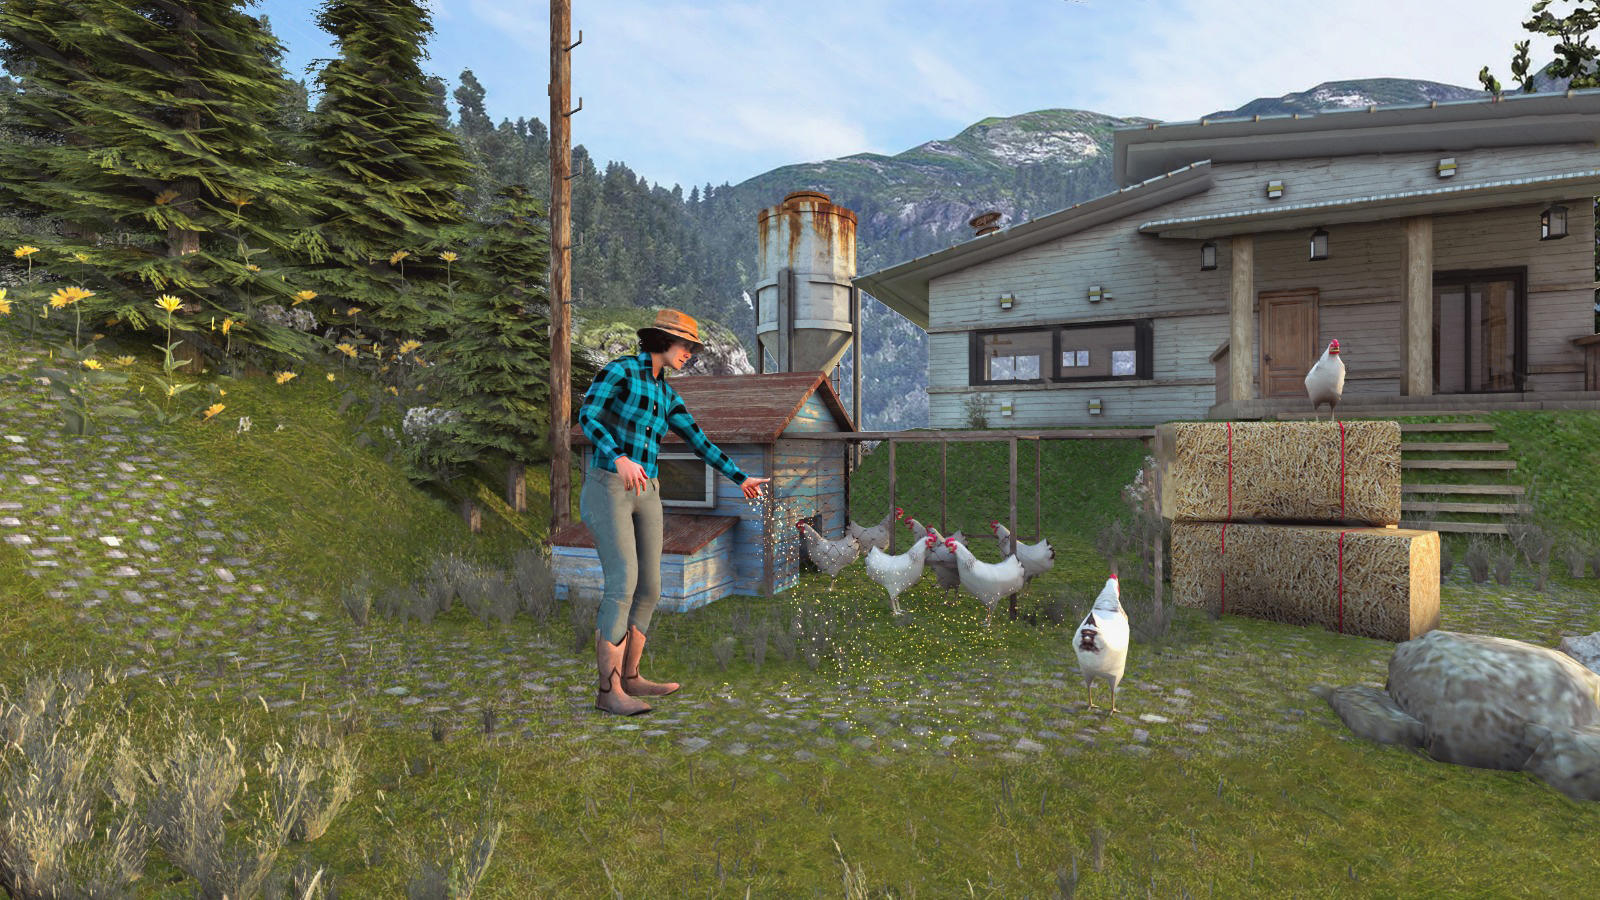 Download Tips of Ranch Simulator Farming Simulator Free for Android - Tips  of Ranch Simulator Farming Simulator APK Download 